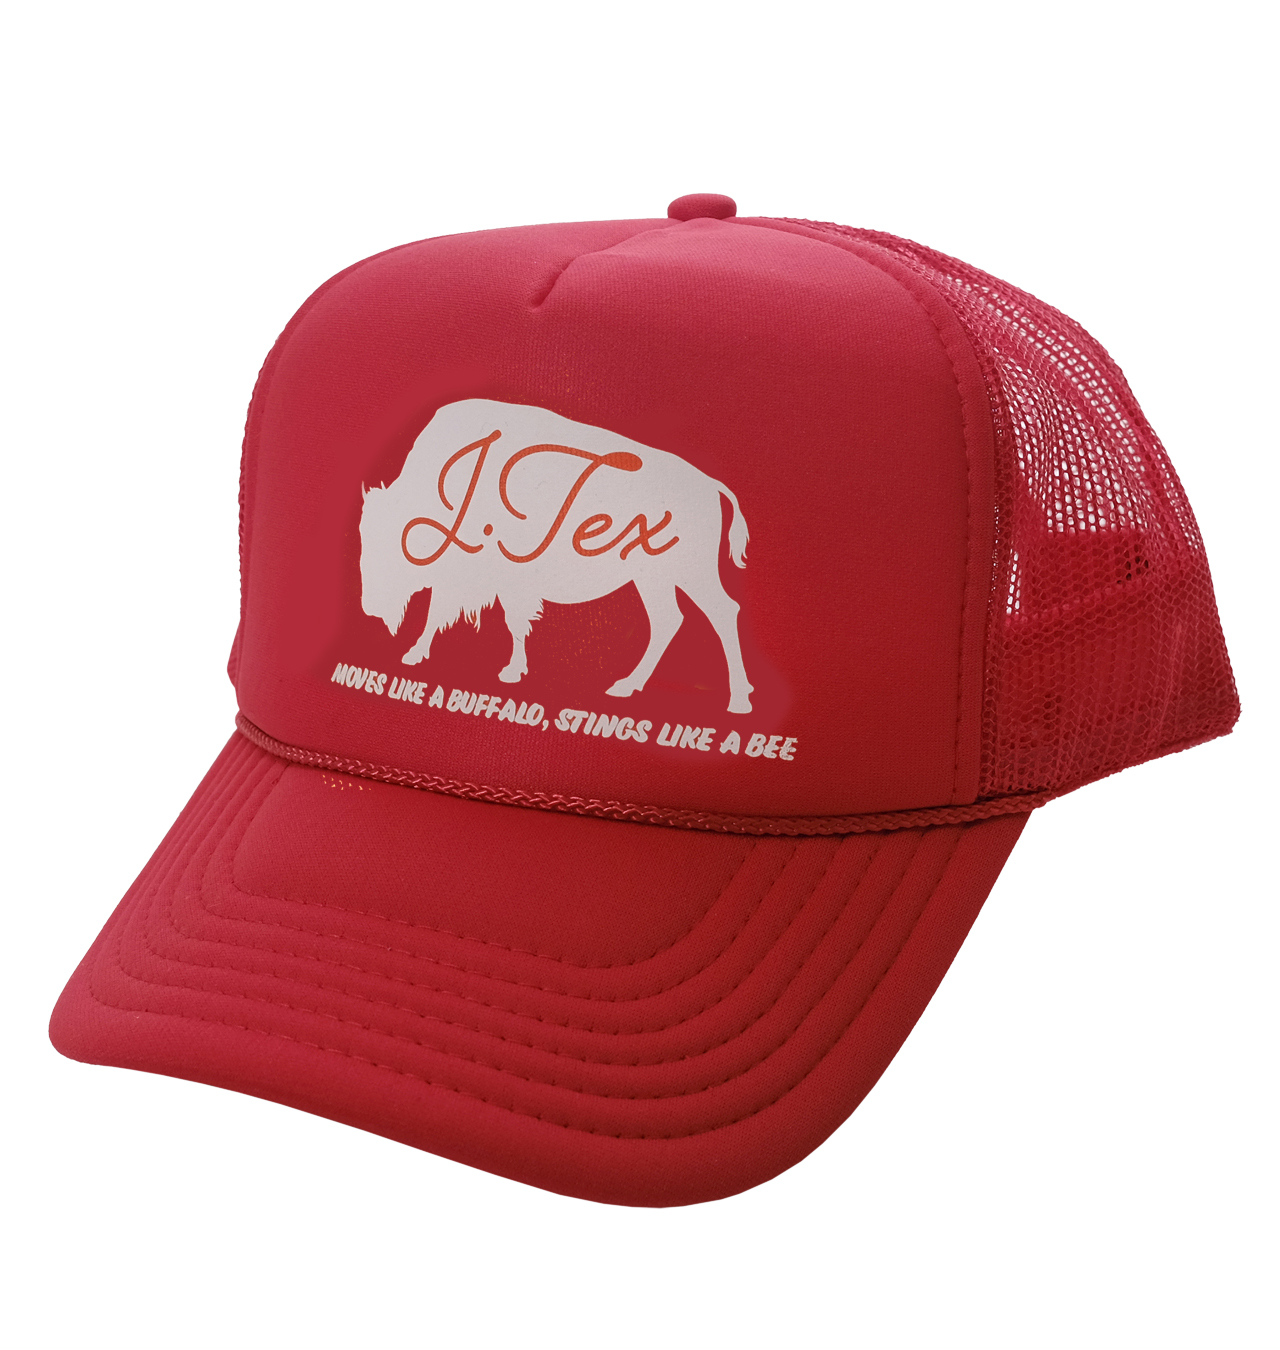 J Tex - Moves Like A Buffalo Trucker Cap - Red/White